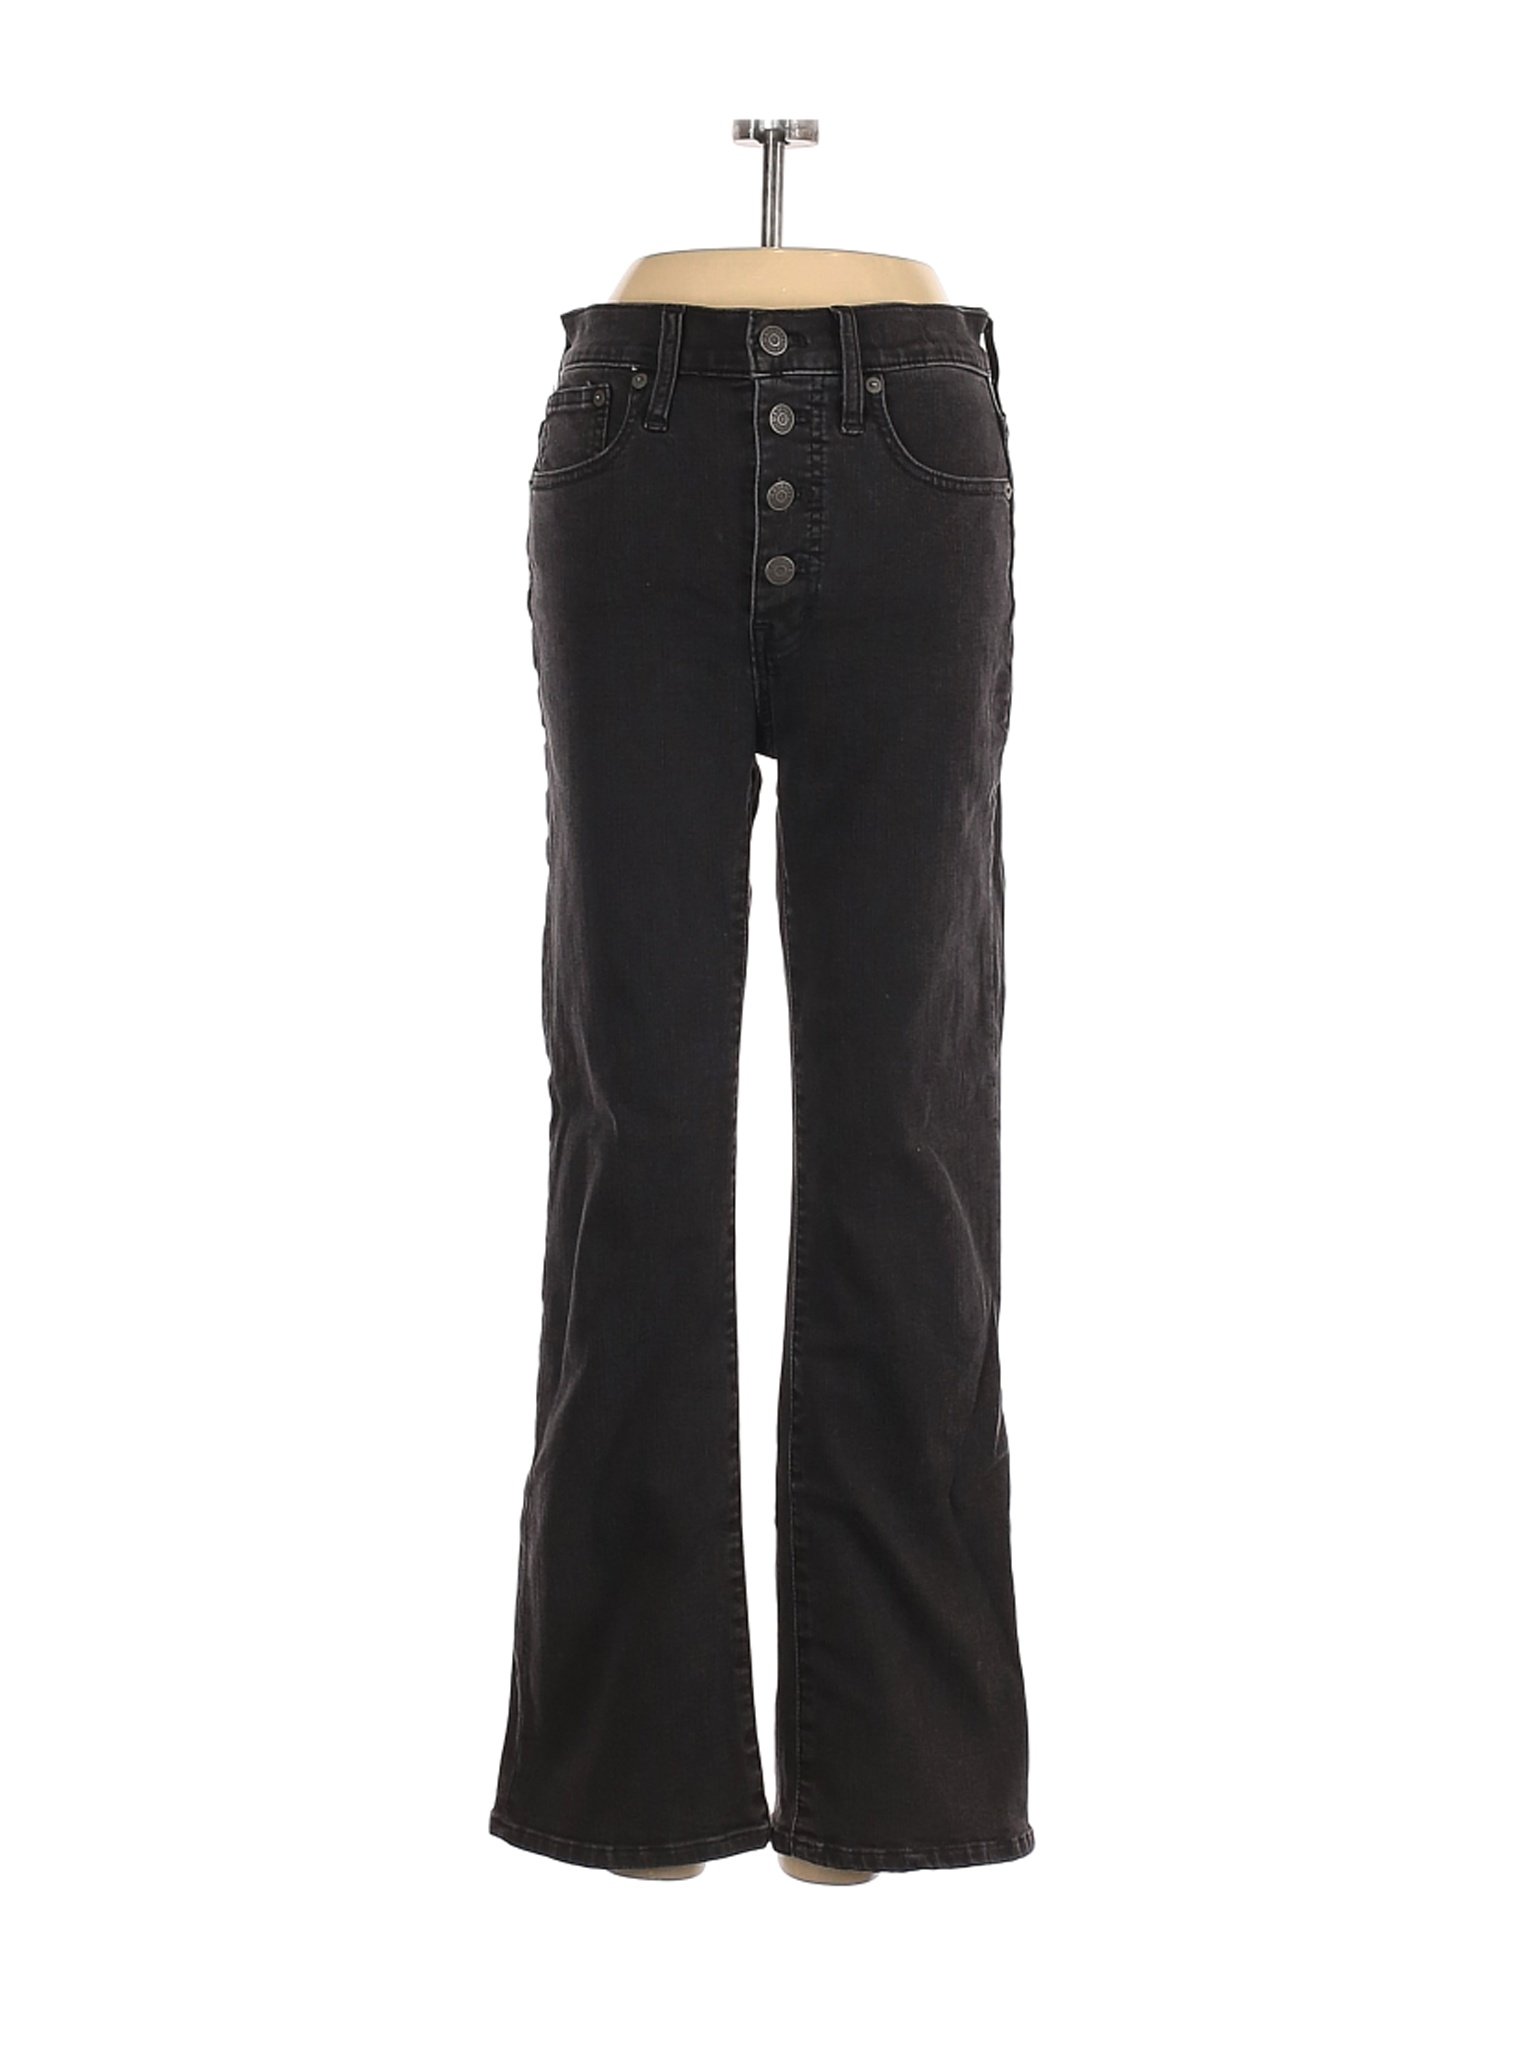 Madewell Women Black Jeans 24W | eBay